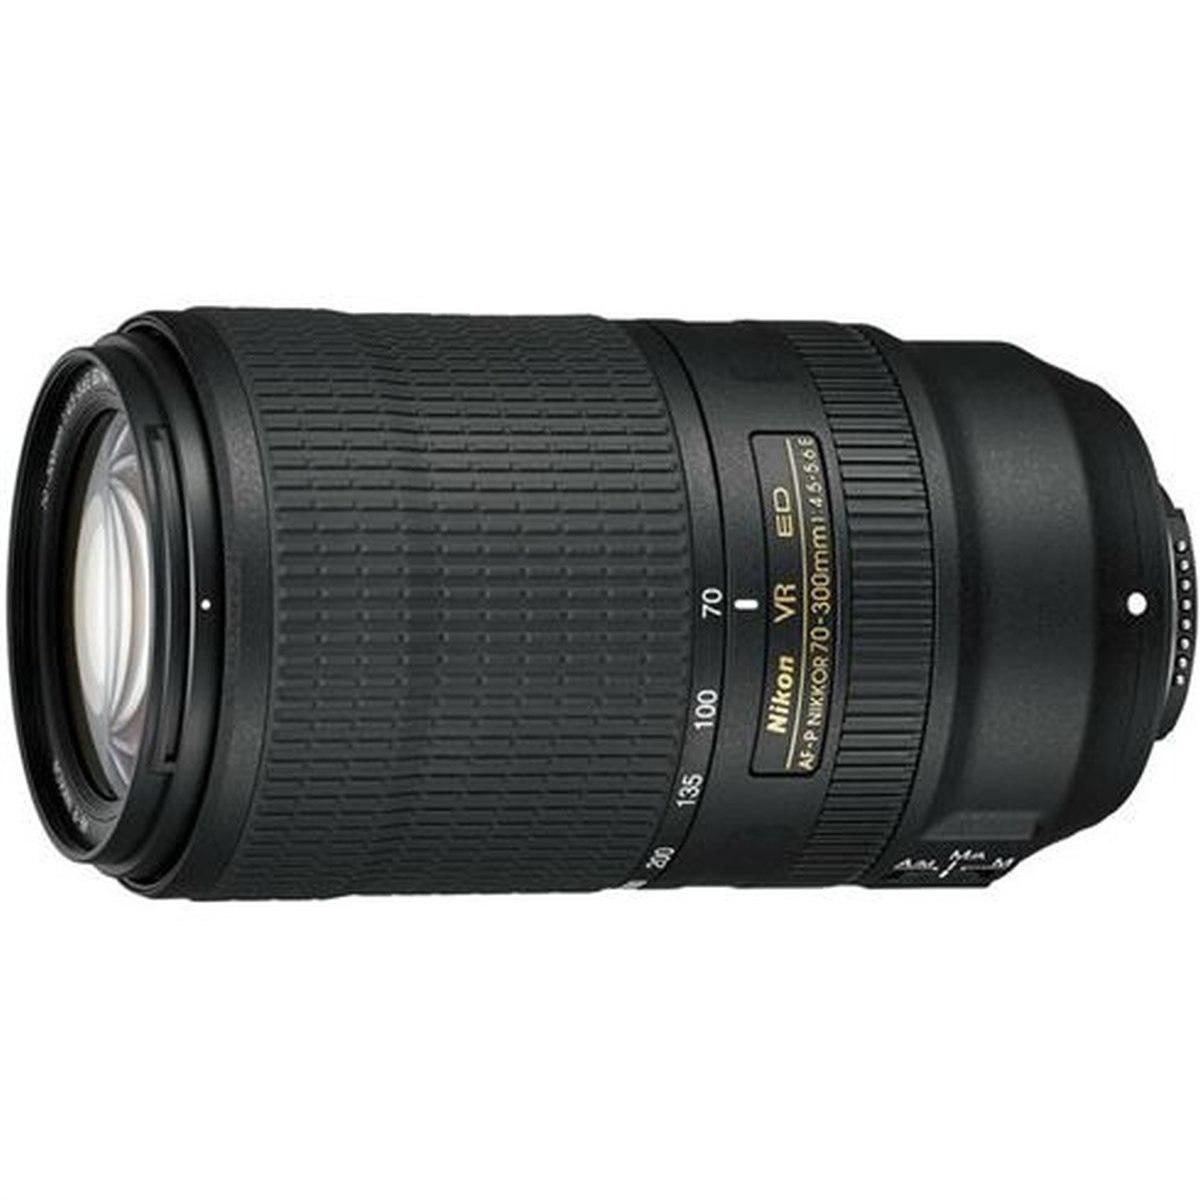 Nikon 70-300mm Af-P F4.5-6.3g Ed Vr - Obiettivo full frame-Garanzia NITAL 4 anni